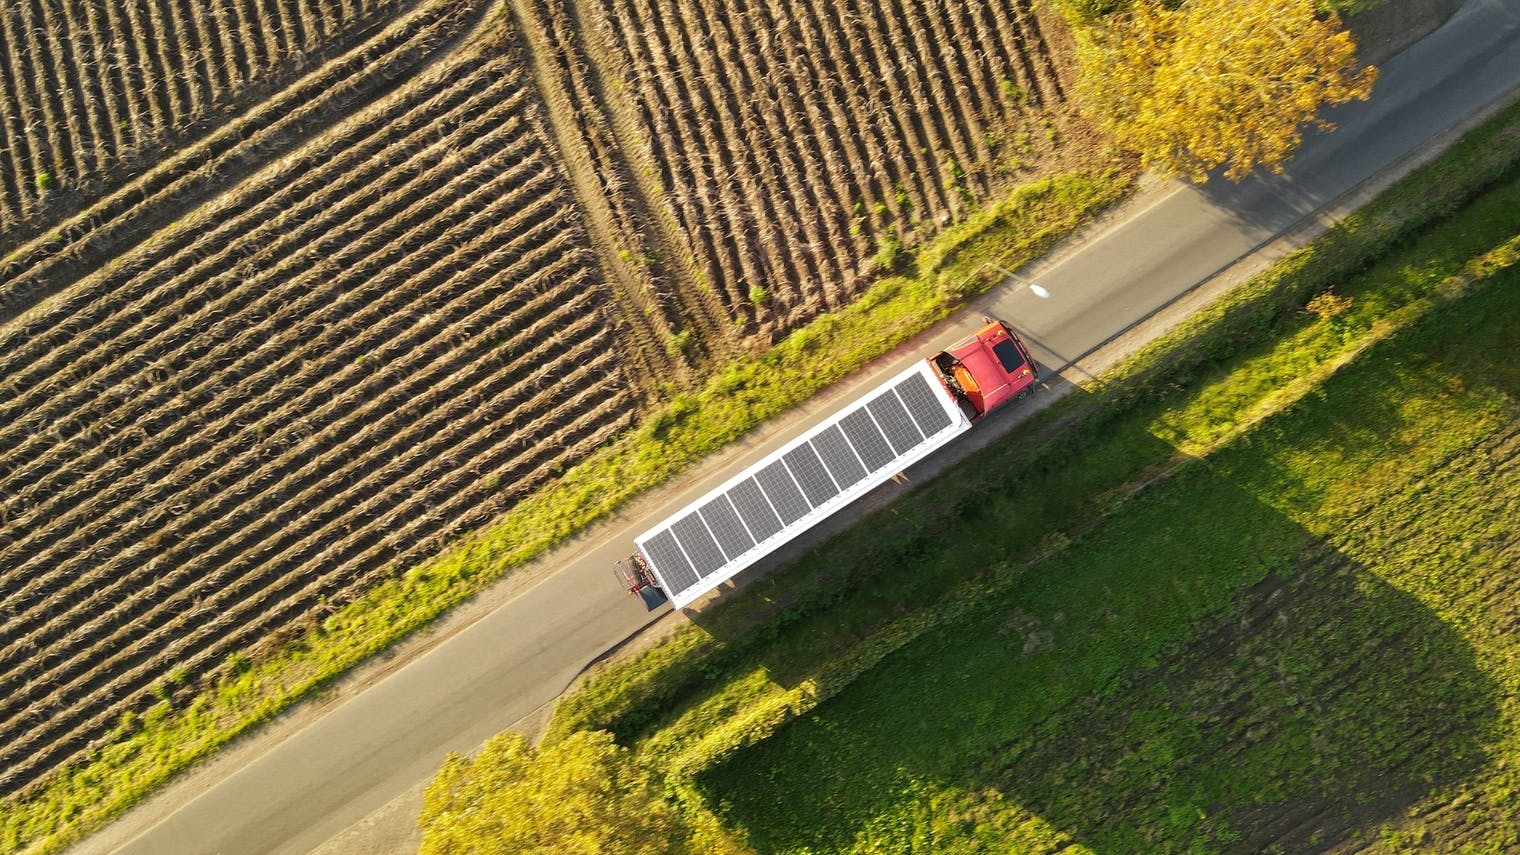 Heemskerk Dairy powers its truck with solar panels through SolarOnTop 